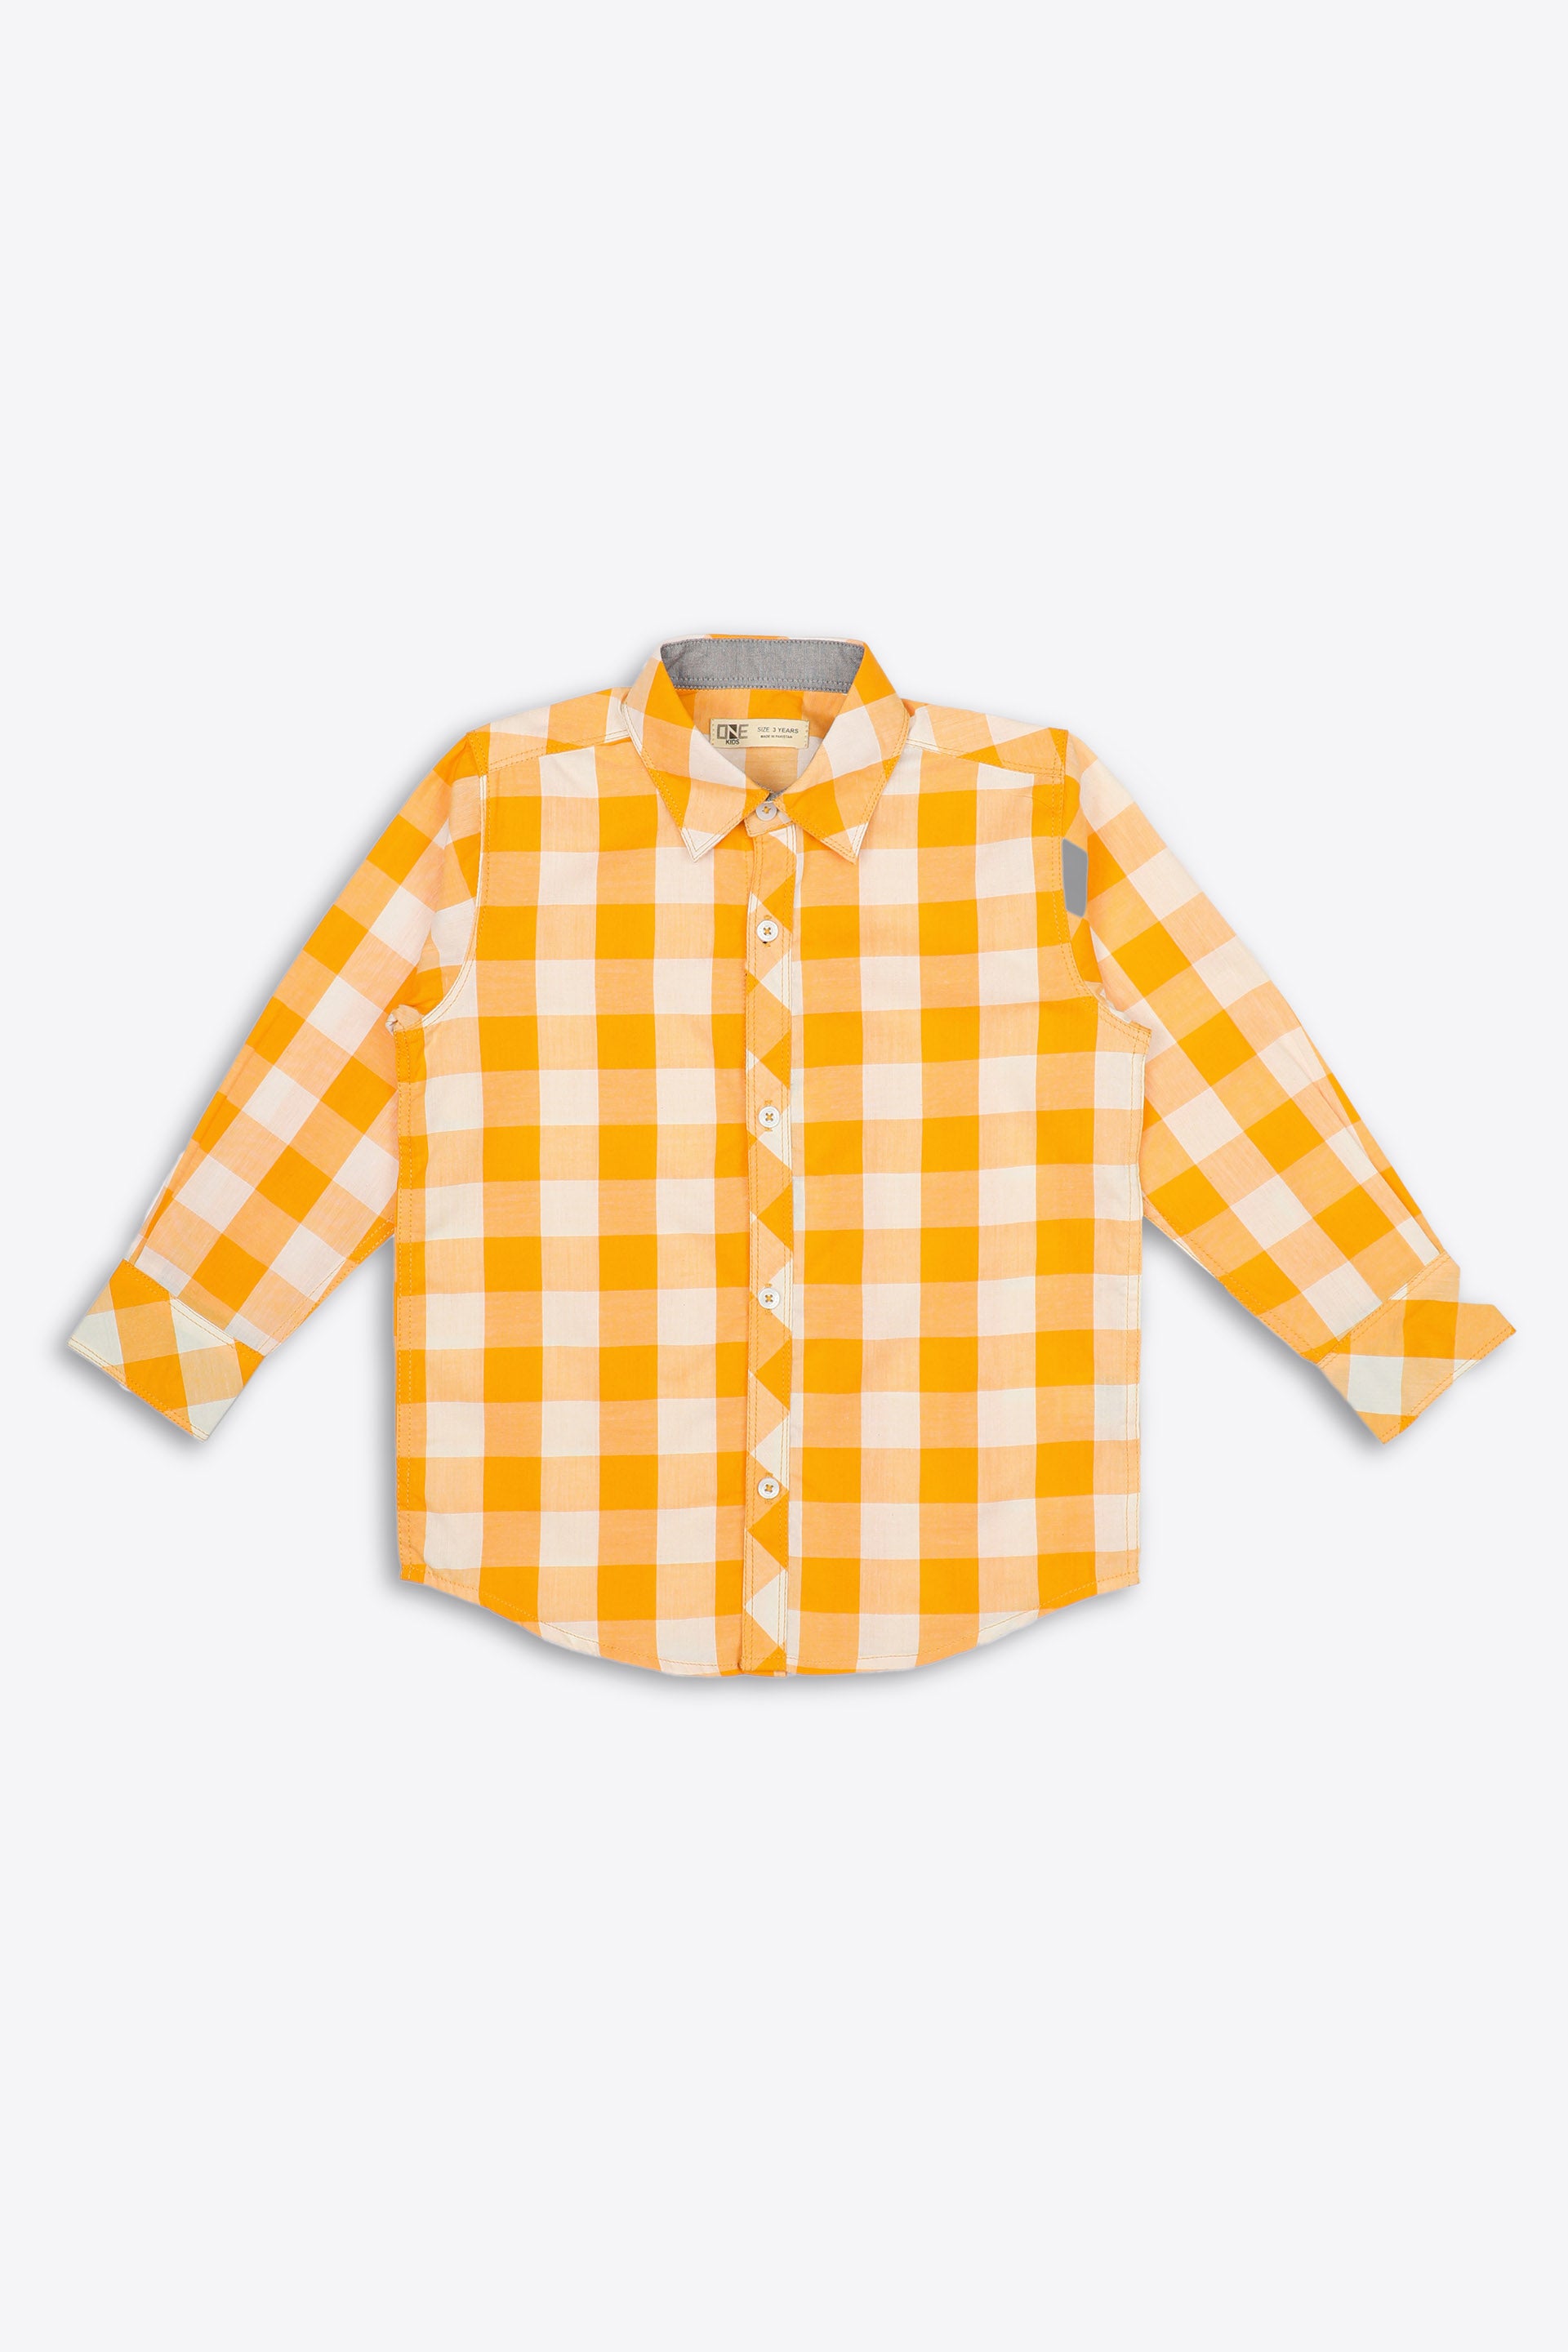 Check Shirt Yellow